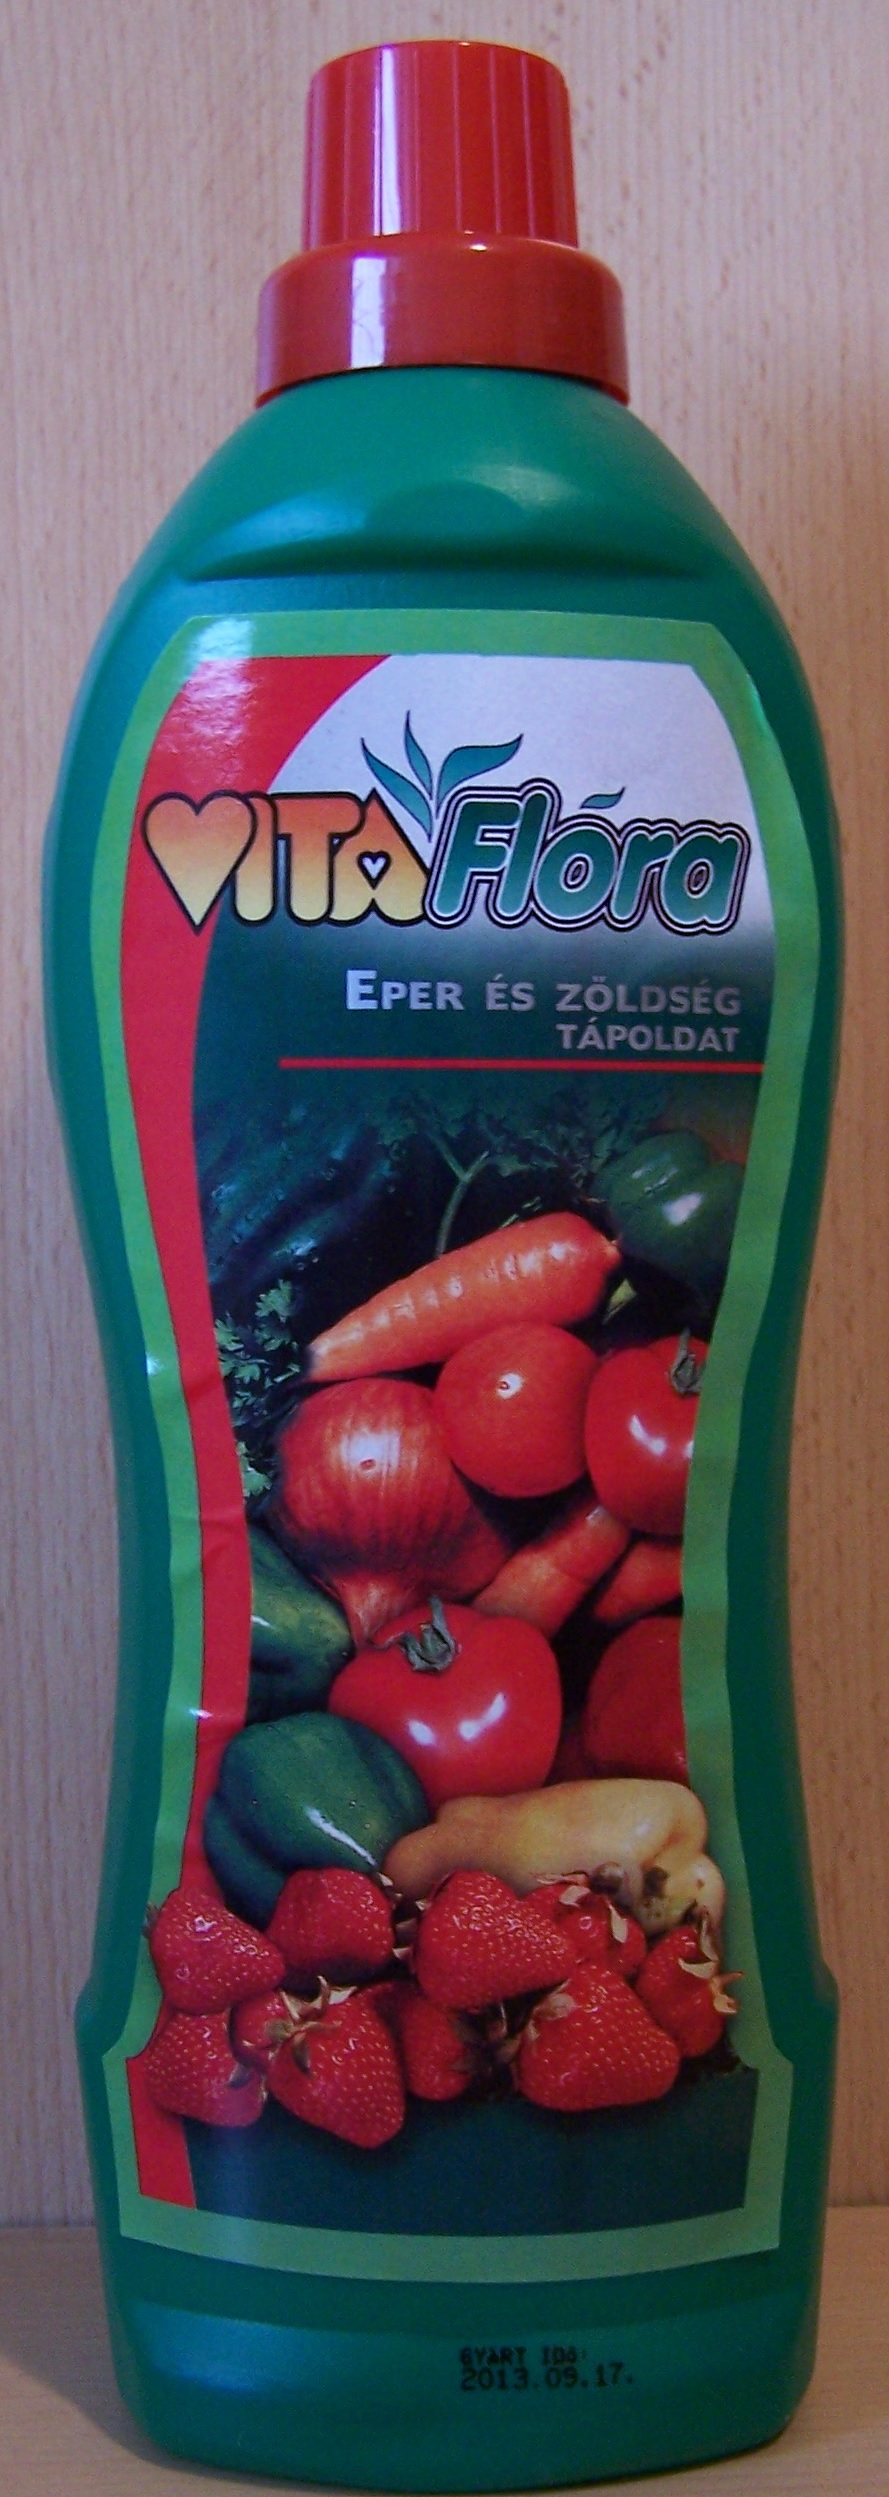 Vitaflor Nährstofflösung Gemüse und Erdbeeren 1l